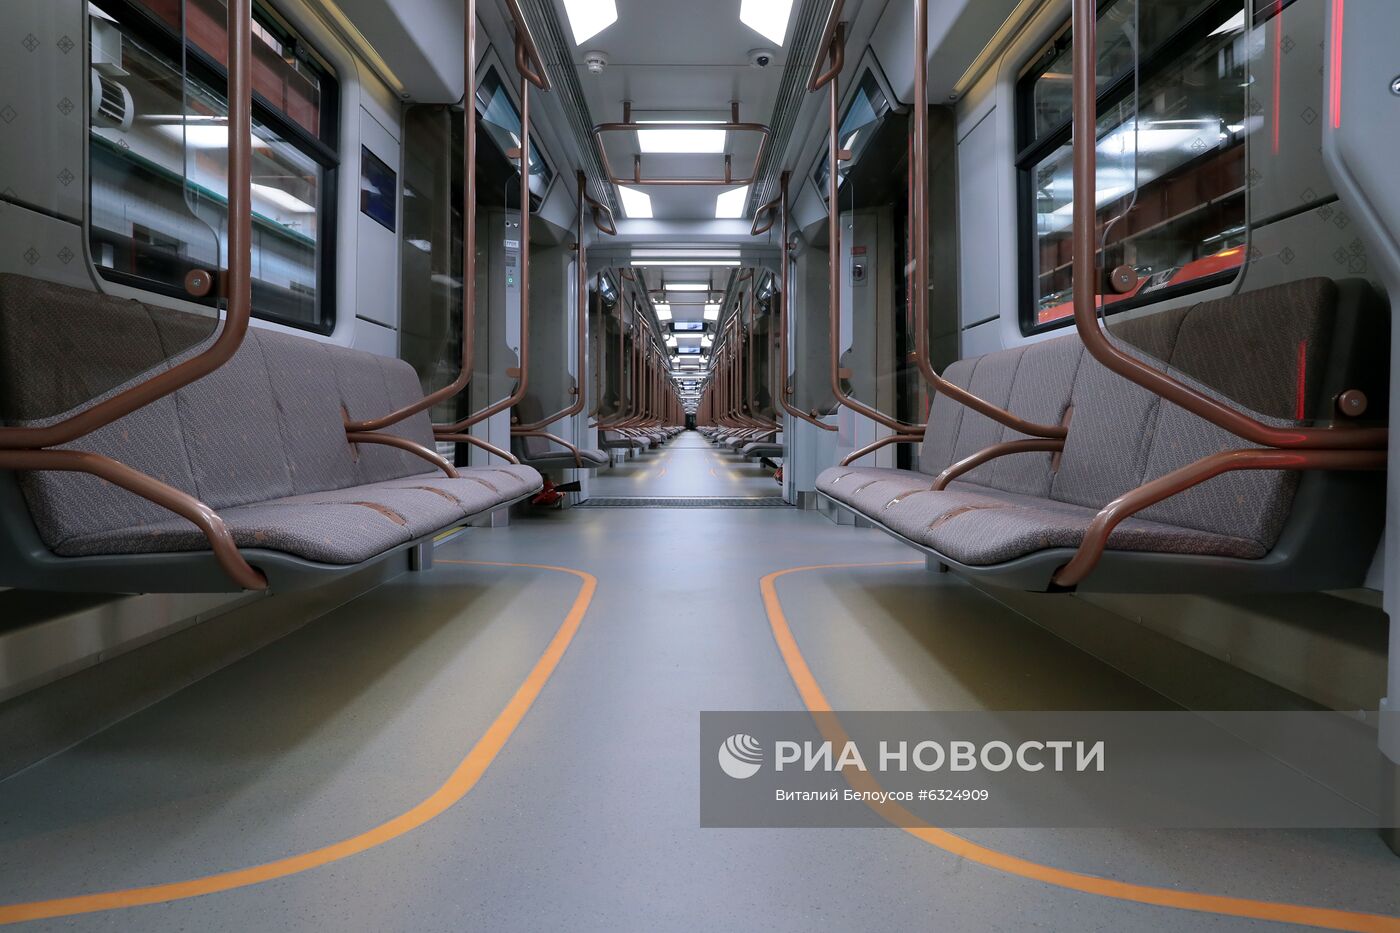 Презентация нового поезда метро "Москва"